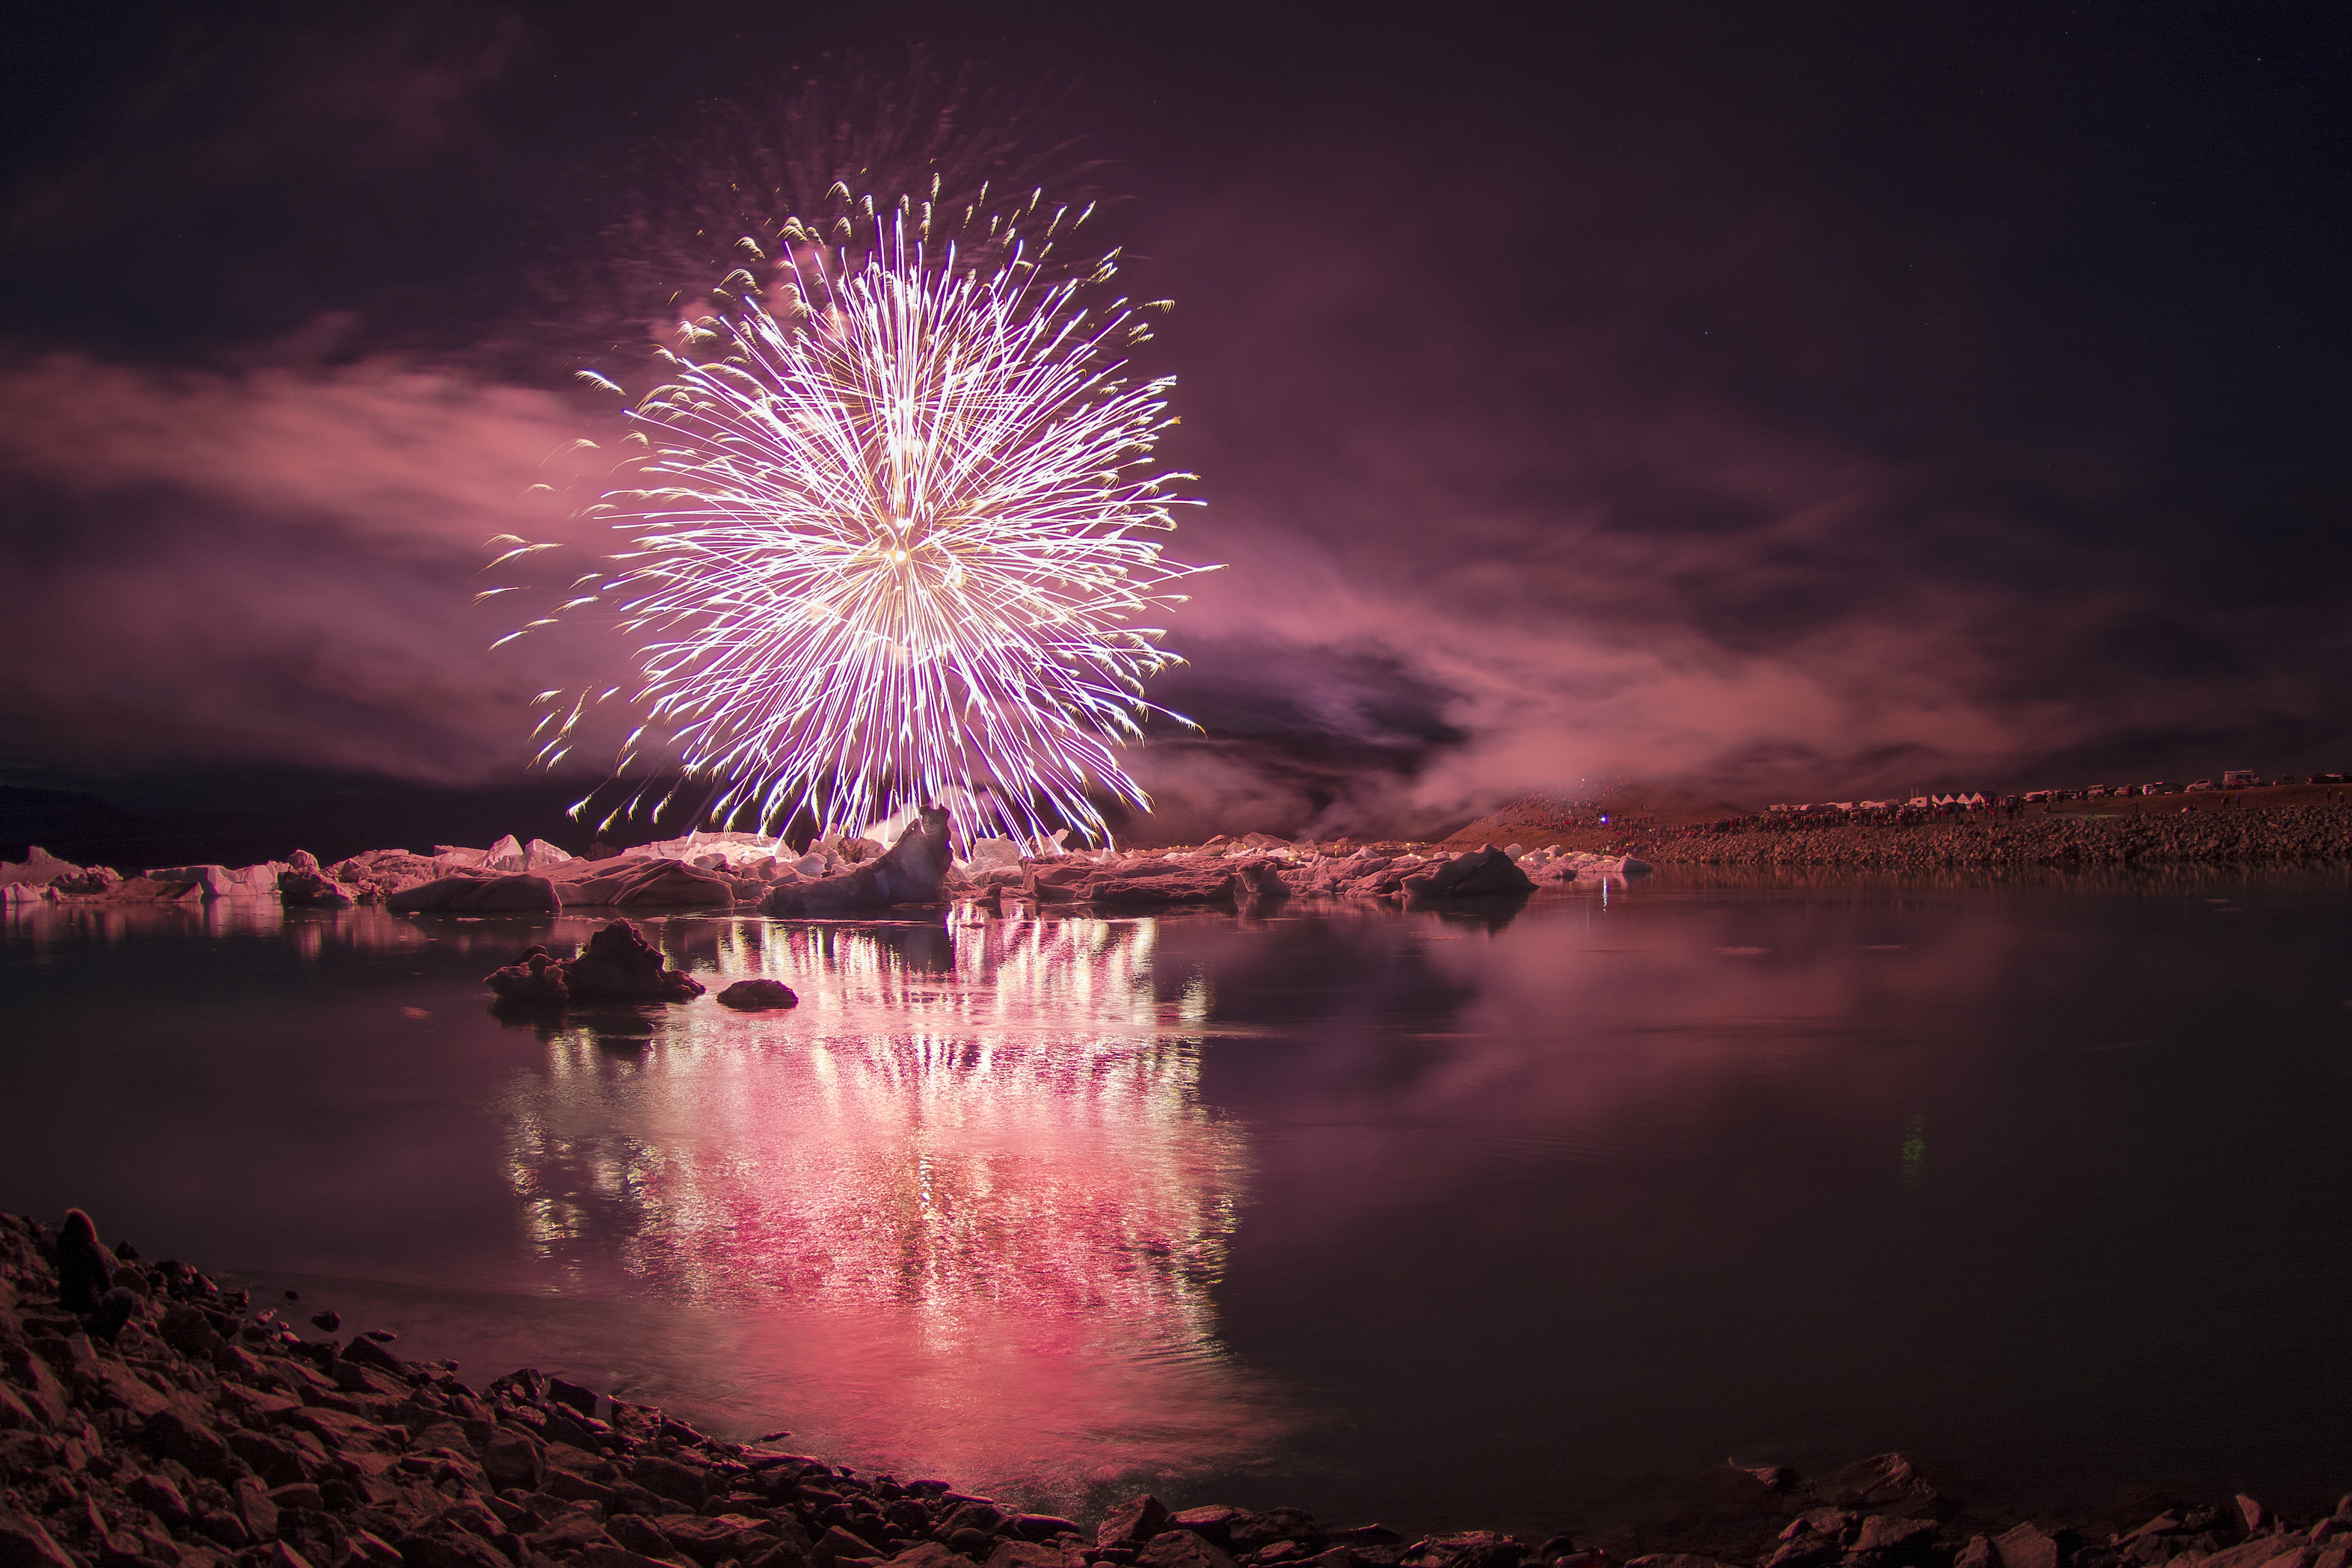 Jökulsárlón Glacier Lagoon fireworks show